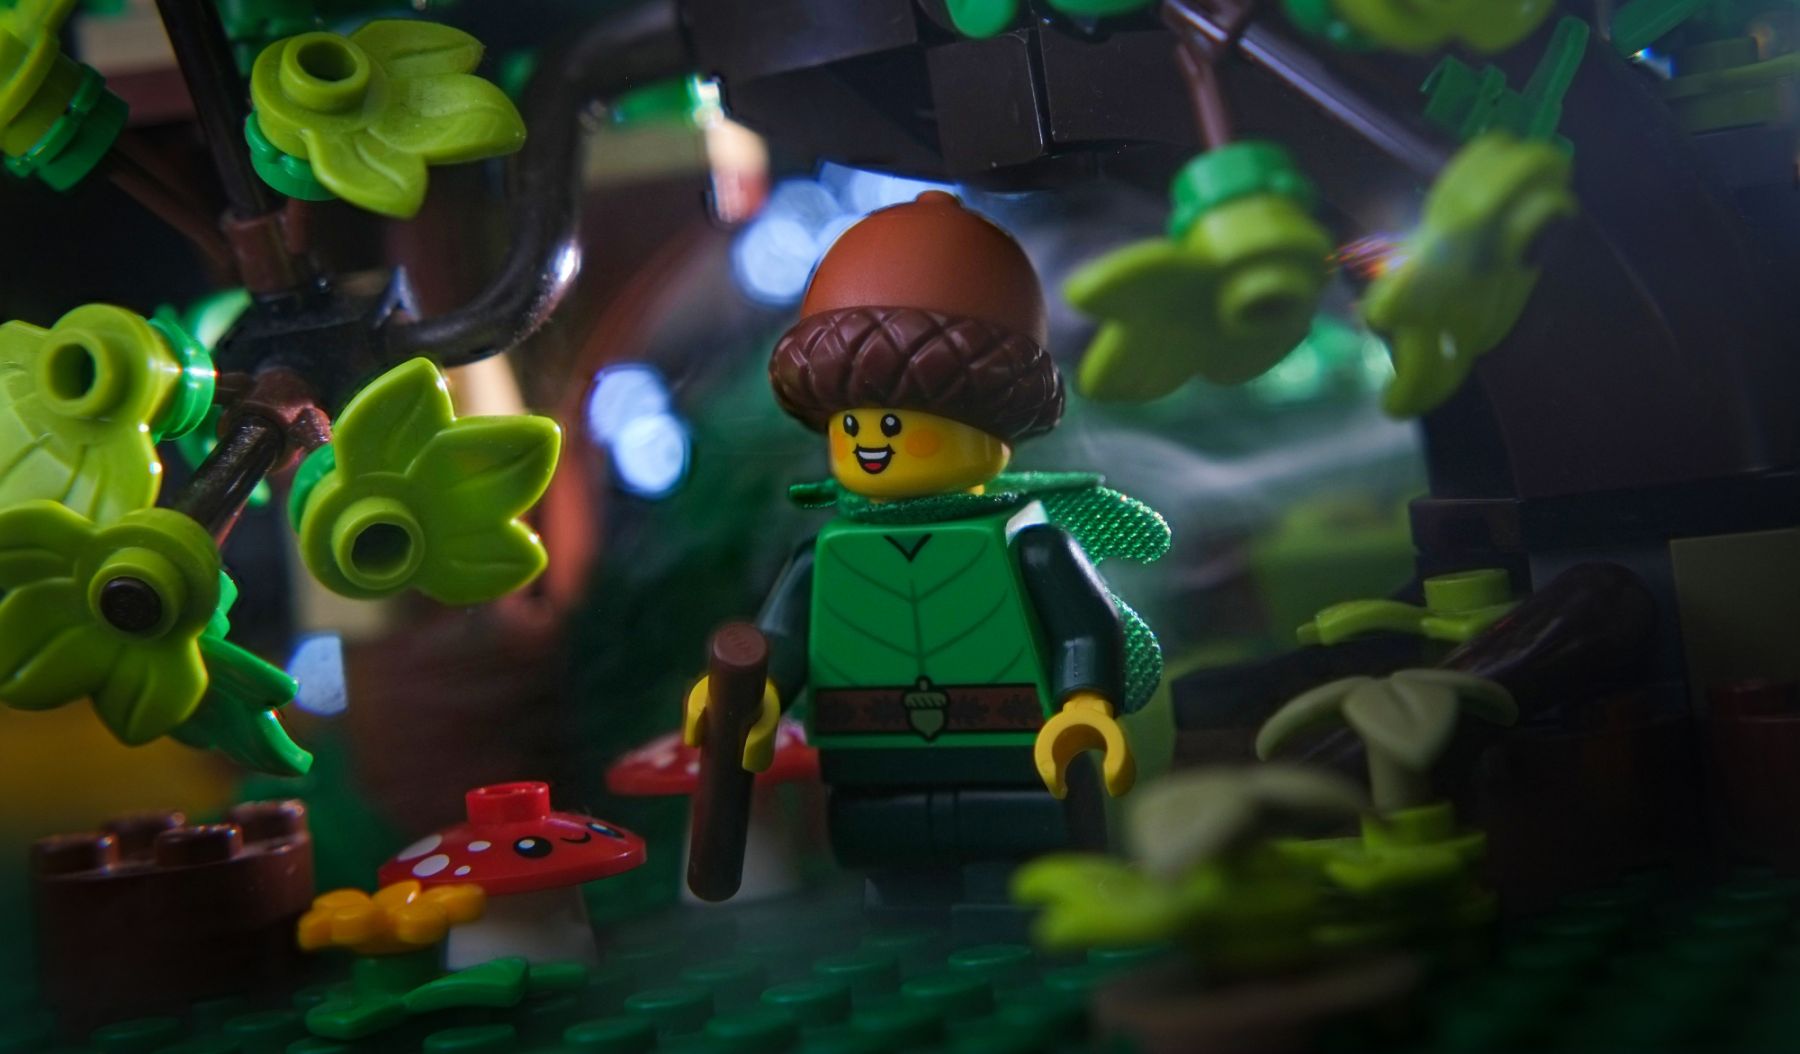 LEGO forest spirit boy minifigure